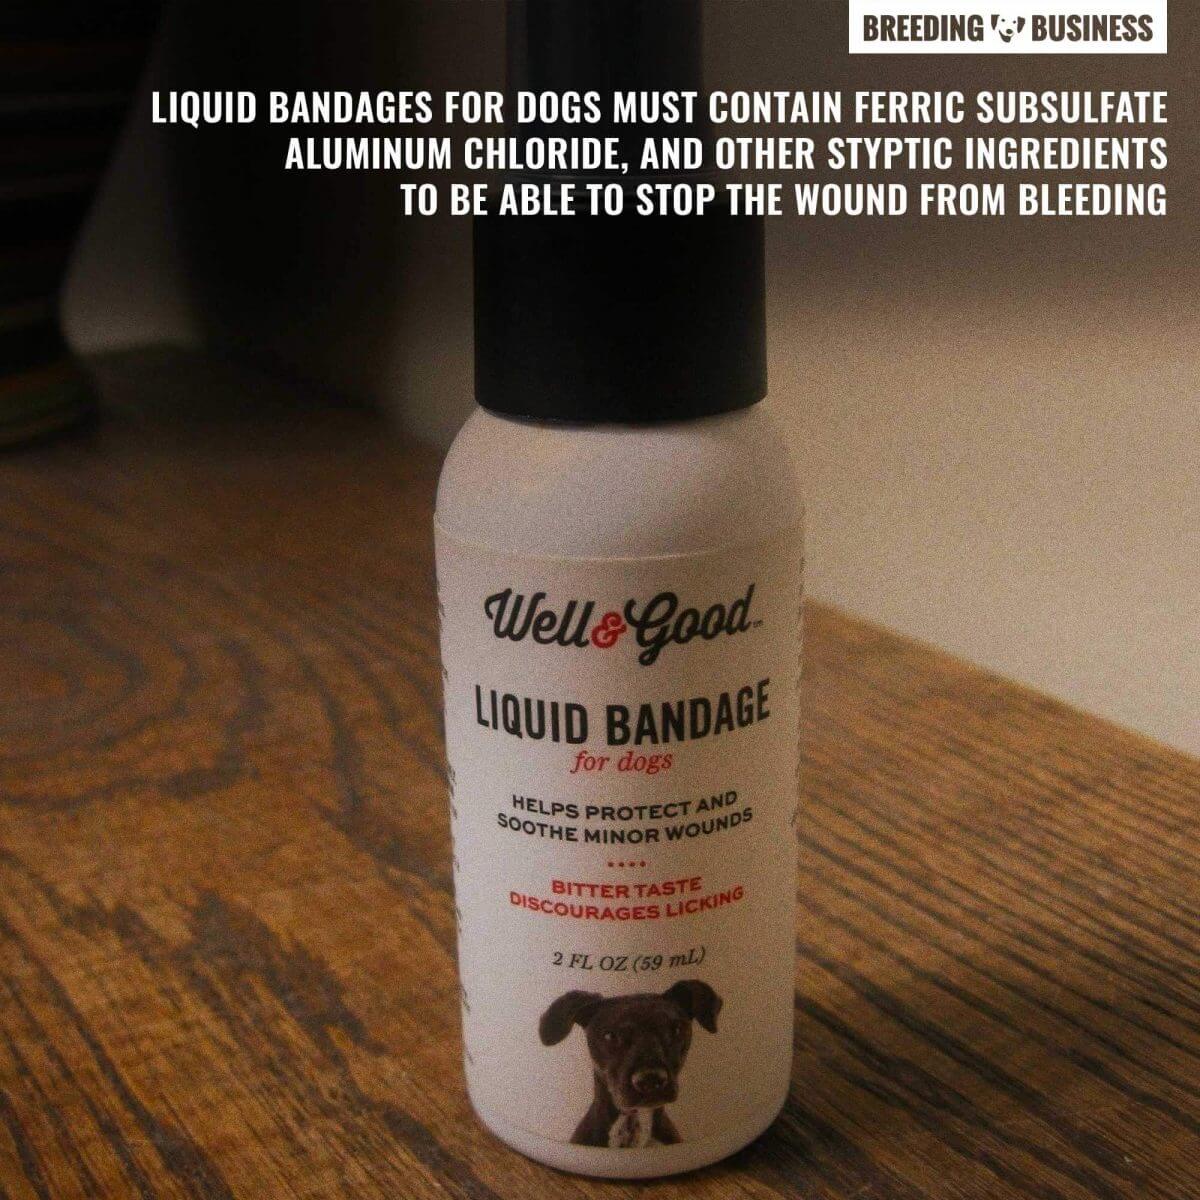 liquid plaster for dogs